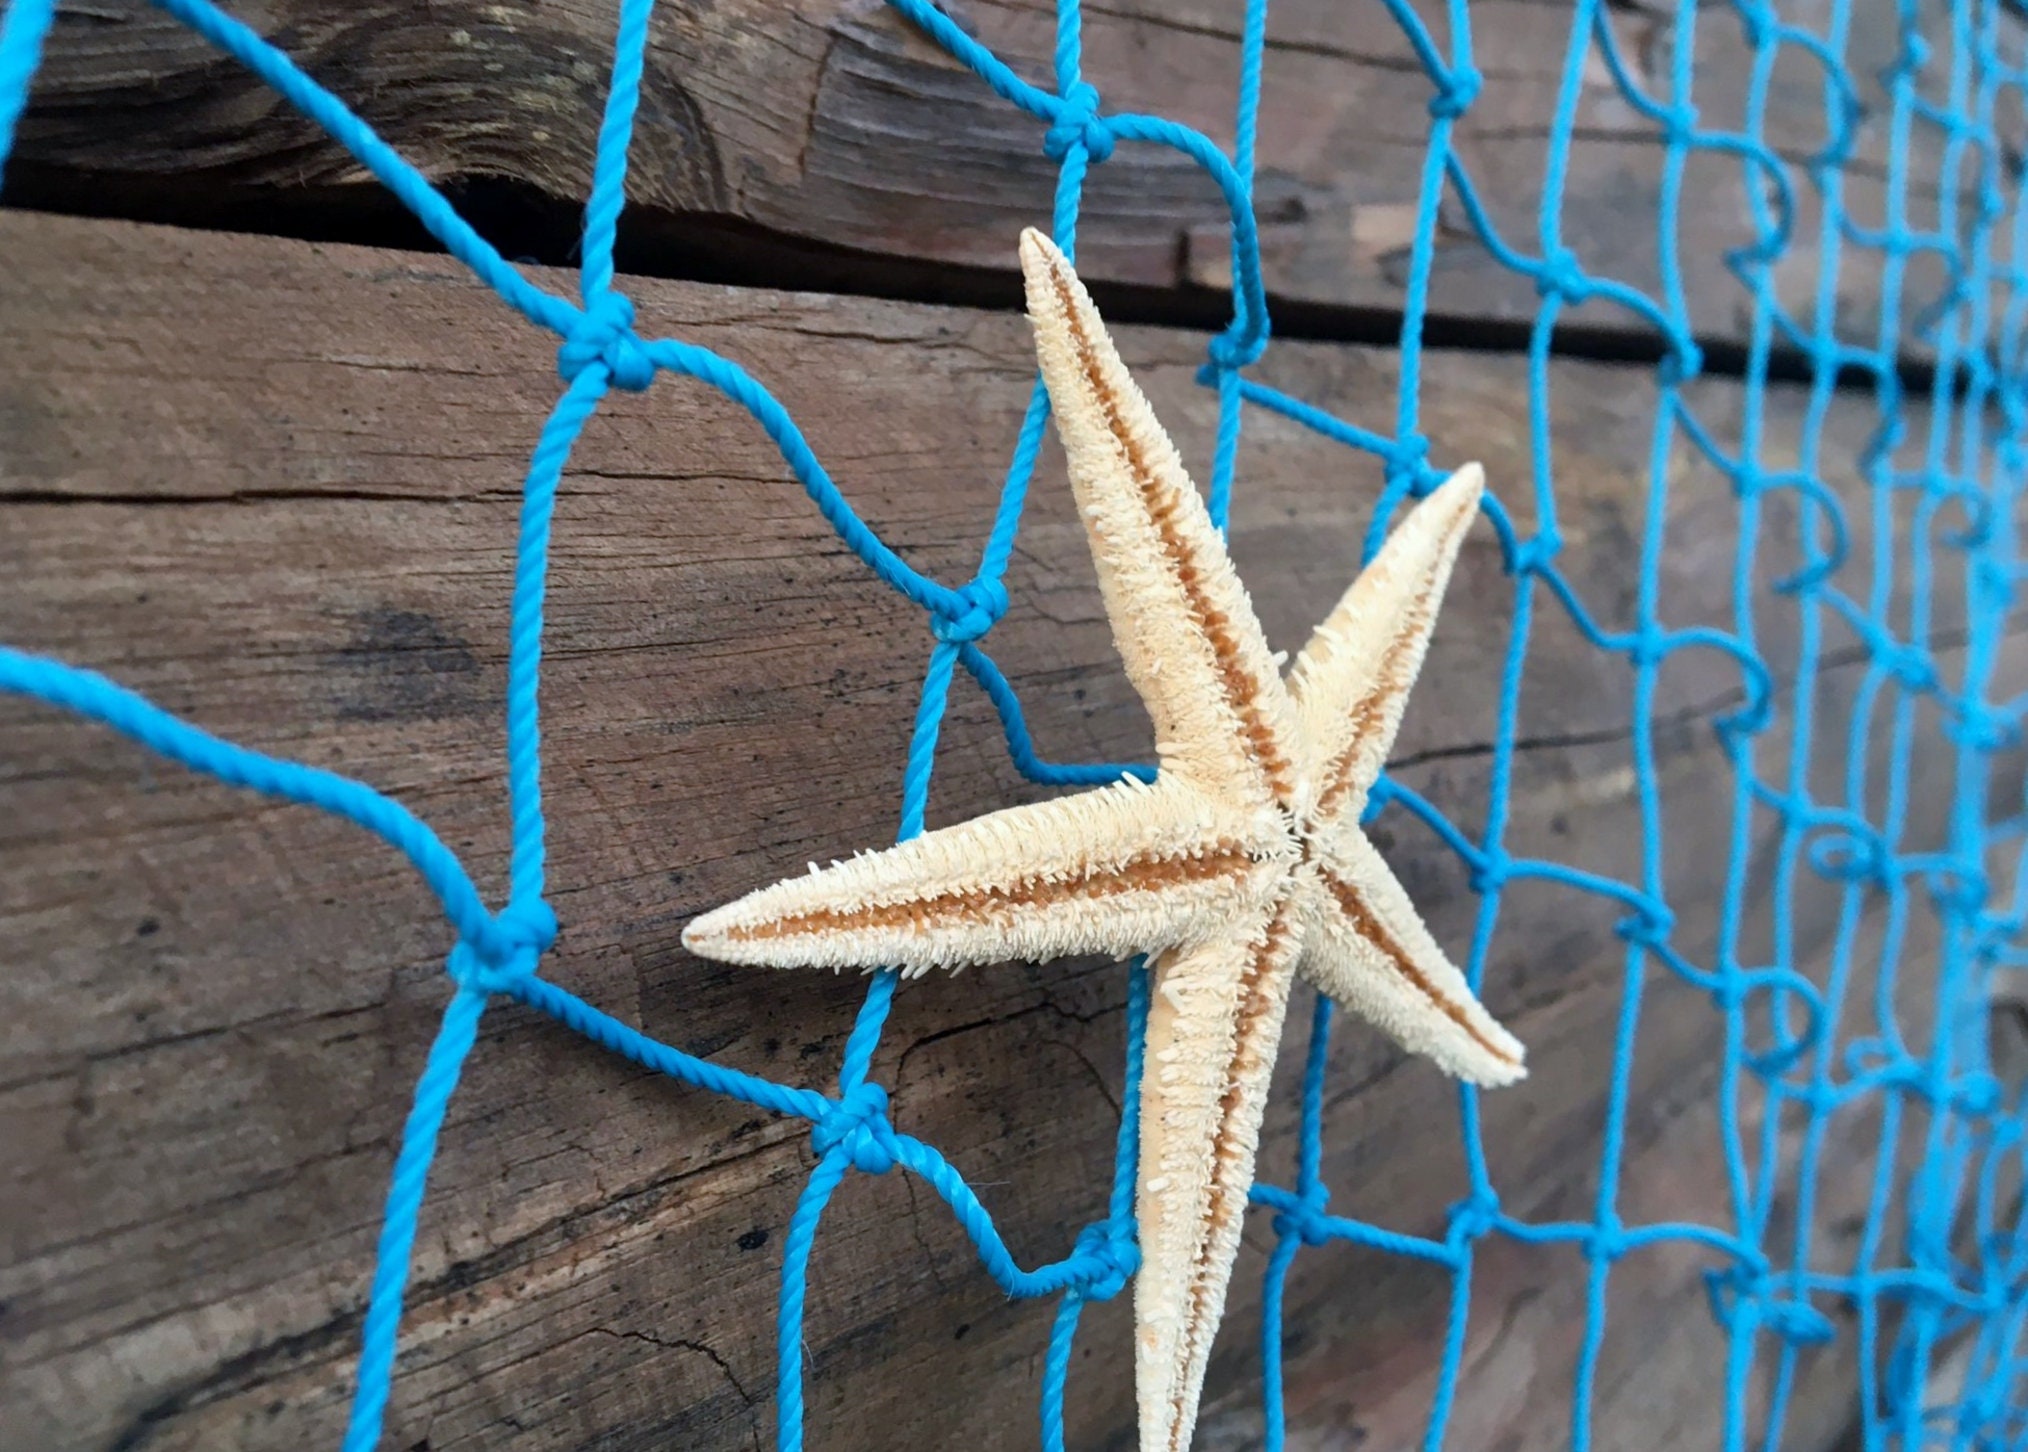 Fish Net Set - Large fishnet with seashells and starfish